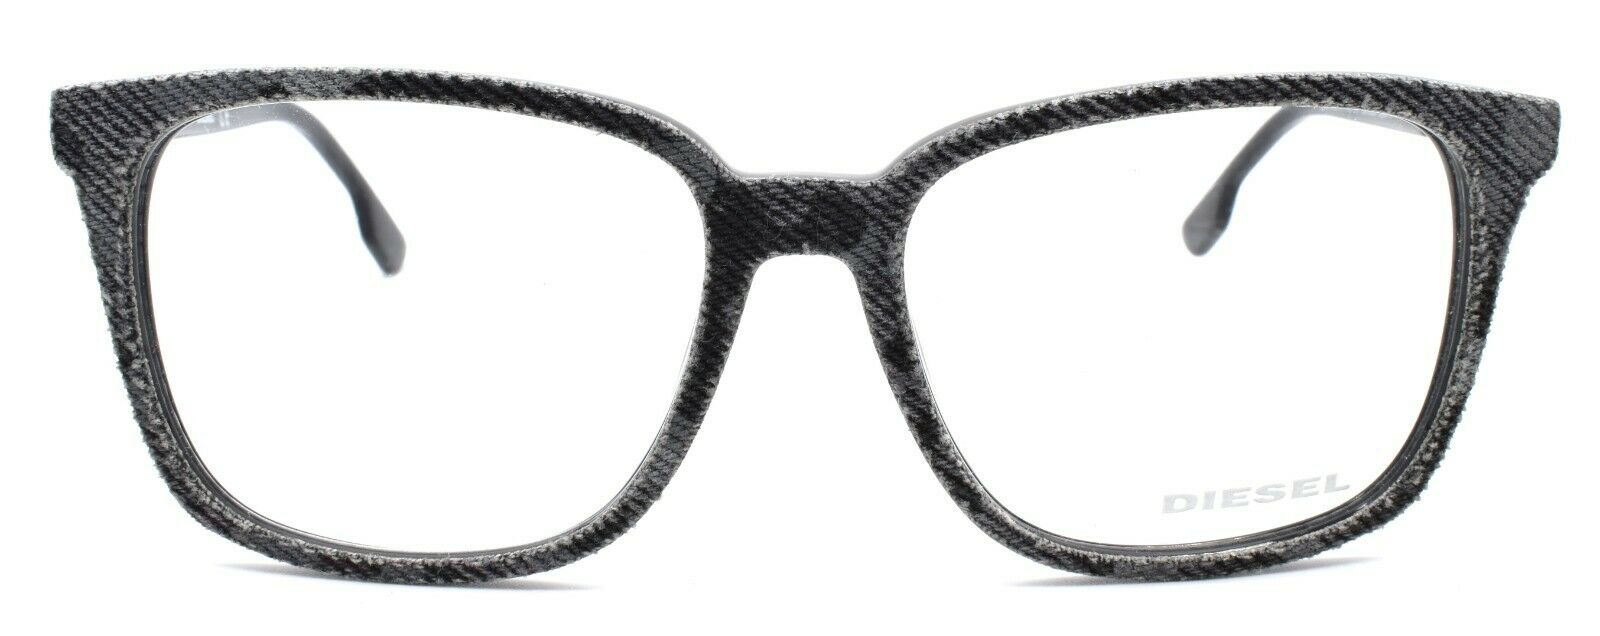 2-Diesel DL5116 005 Unisex Eyeglasses Frames 53-16-145 Grey Pattern Denim / Black-664689645817-IKSpecs